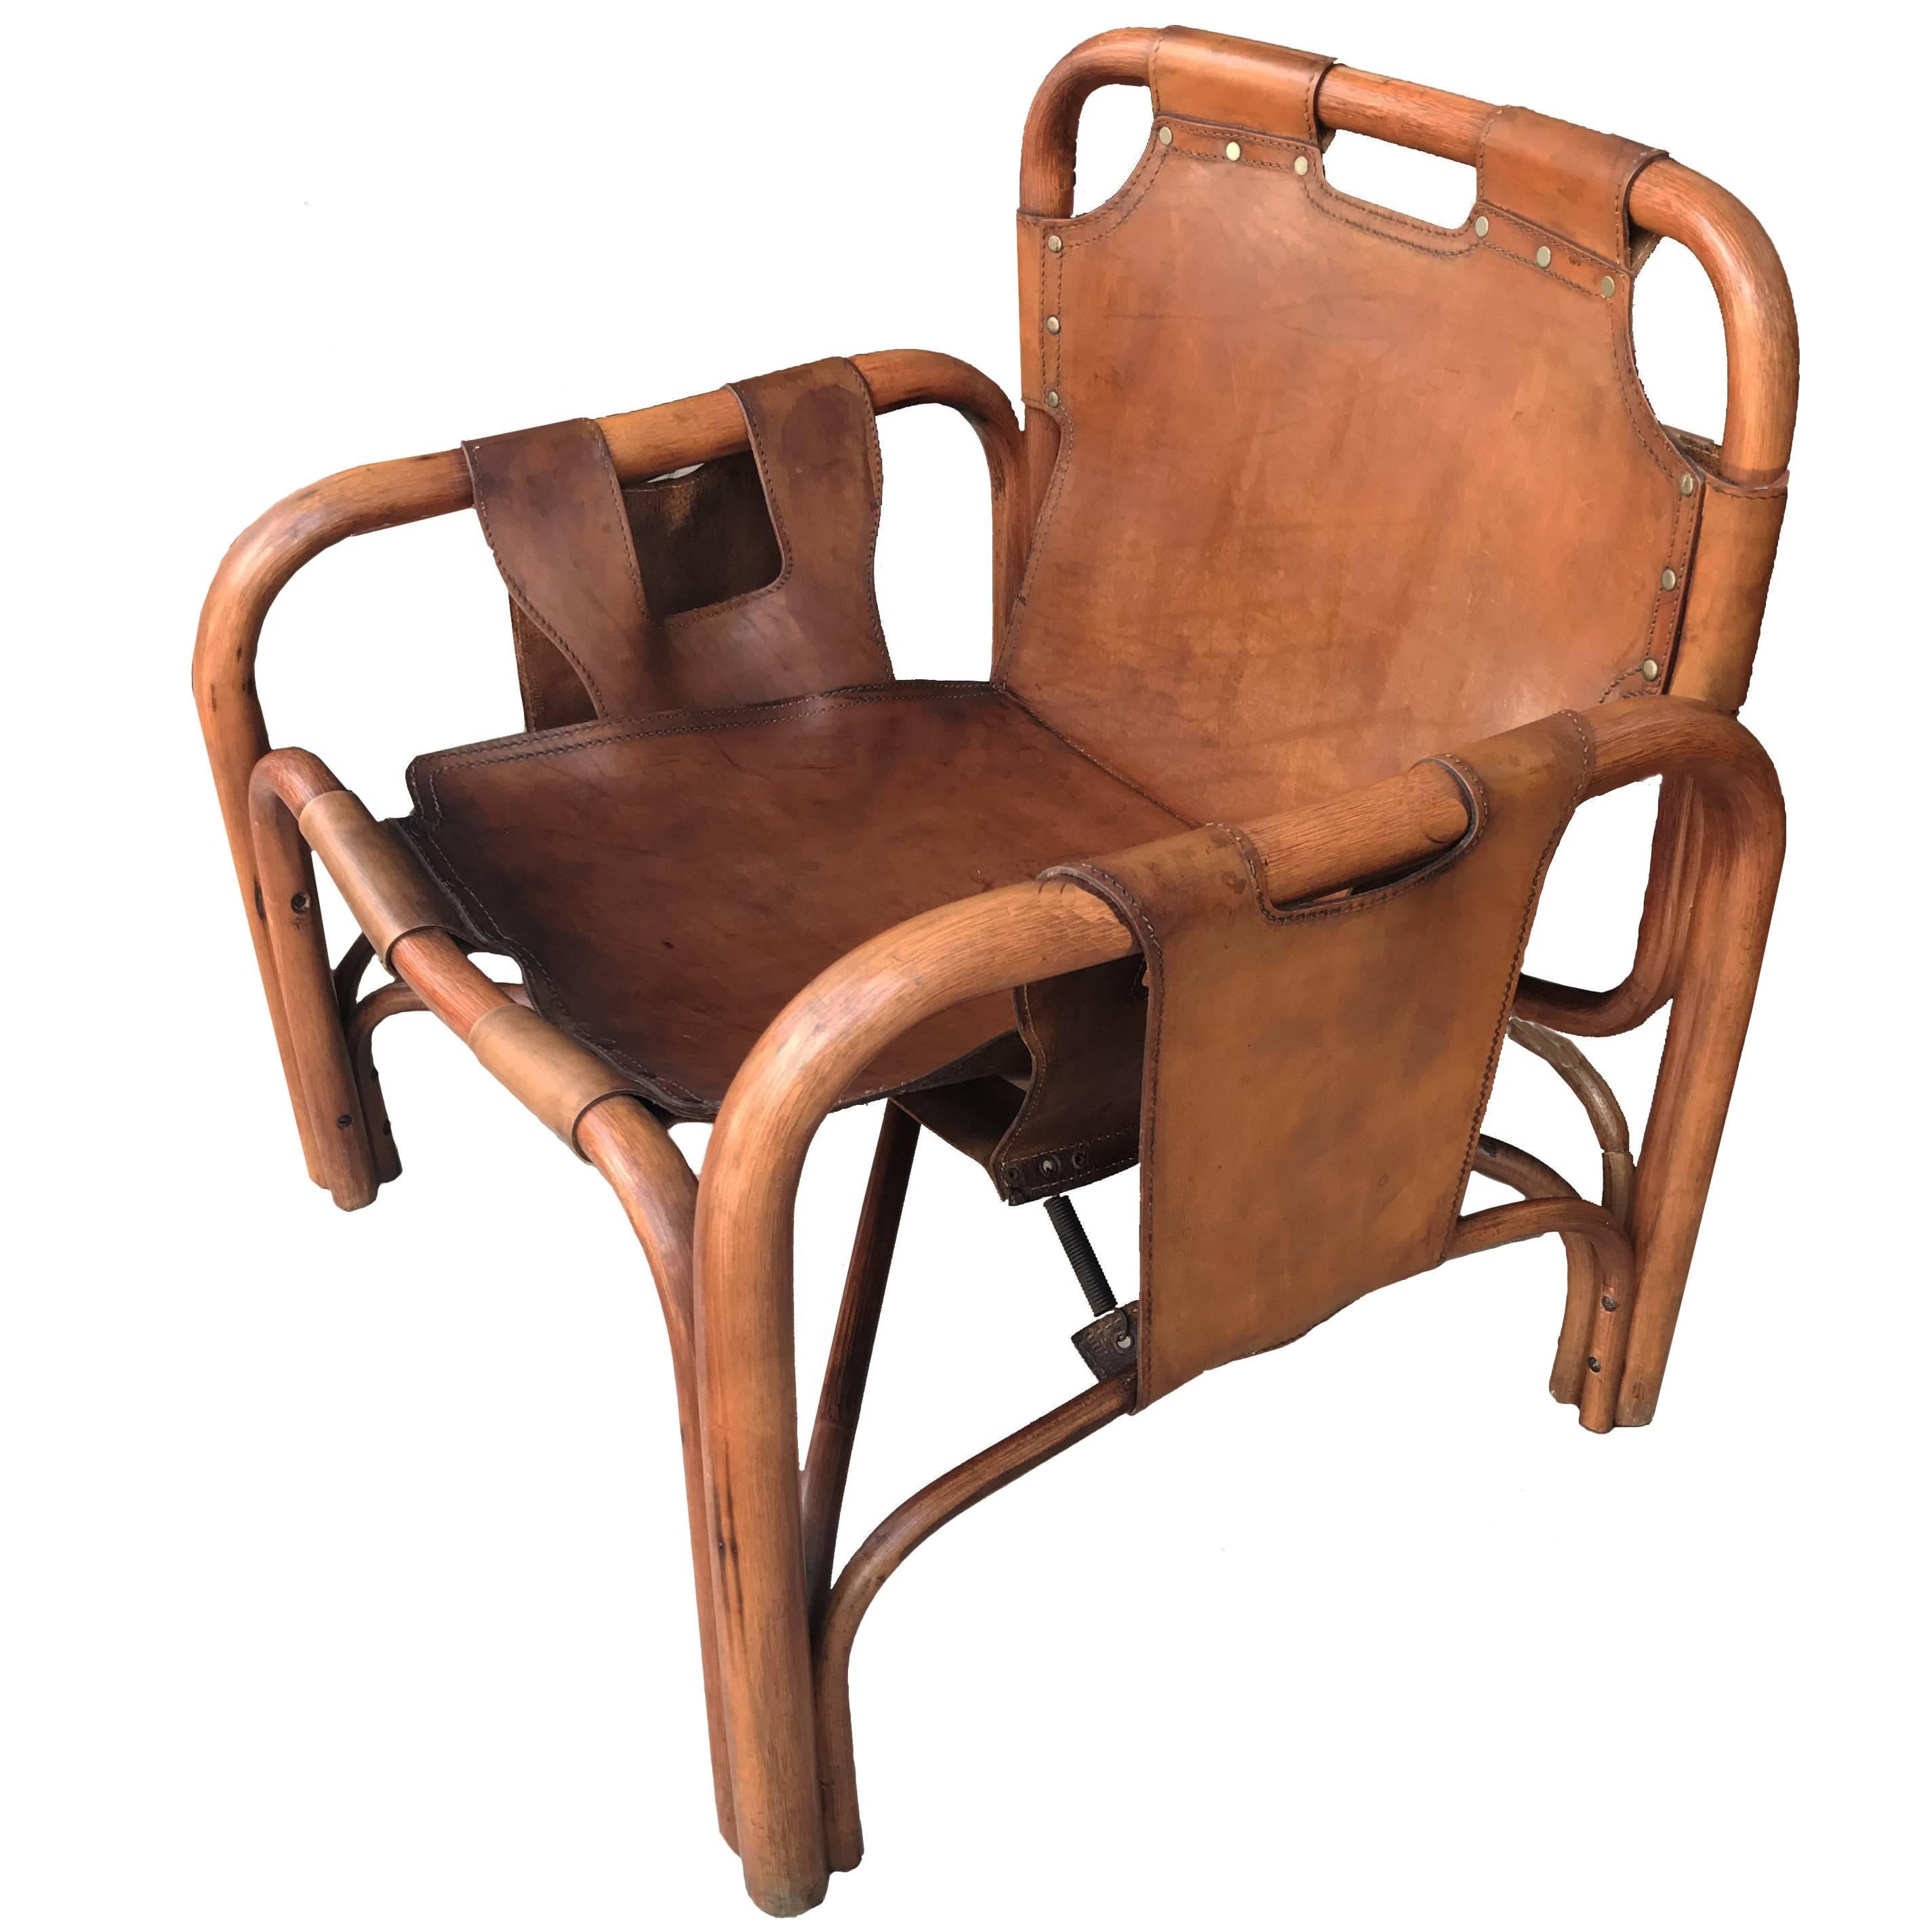 Italian Mid-Century Modern Bamboo and Leather Lounge Chair by Bonacina